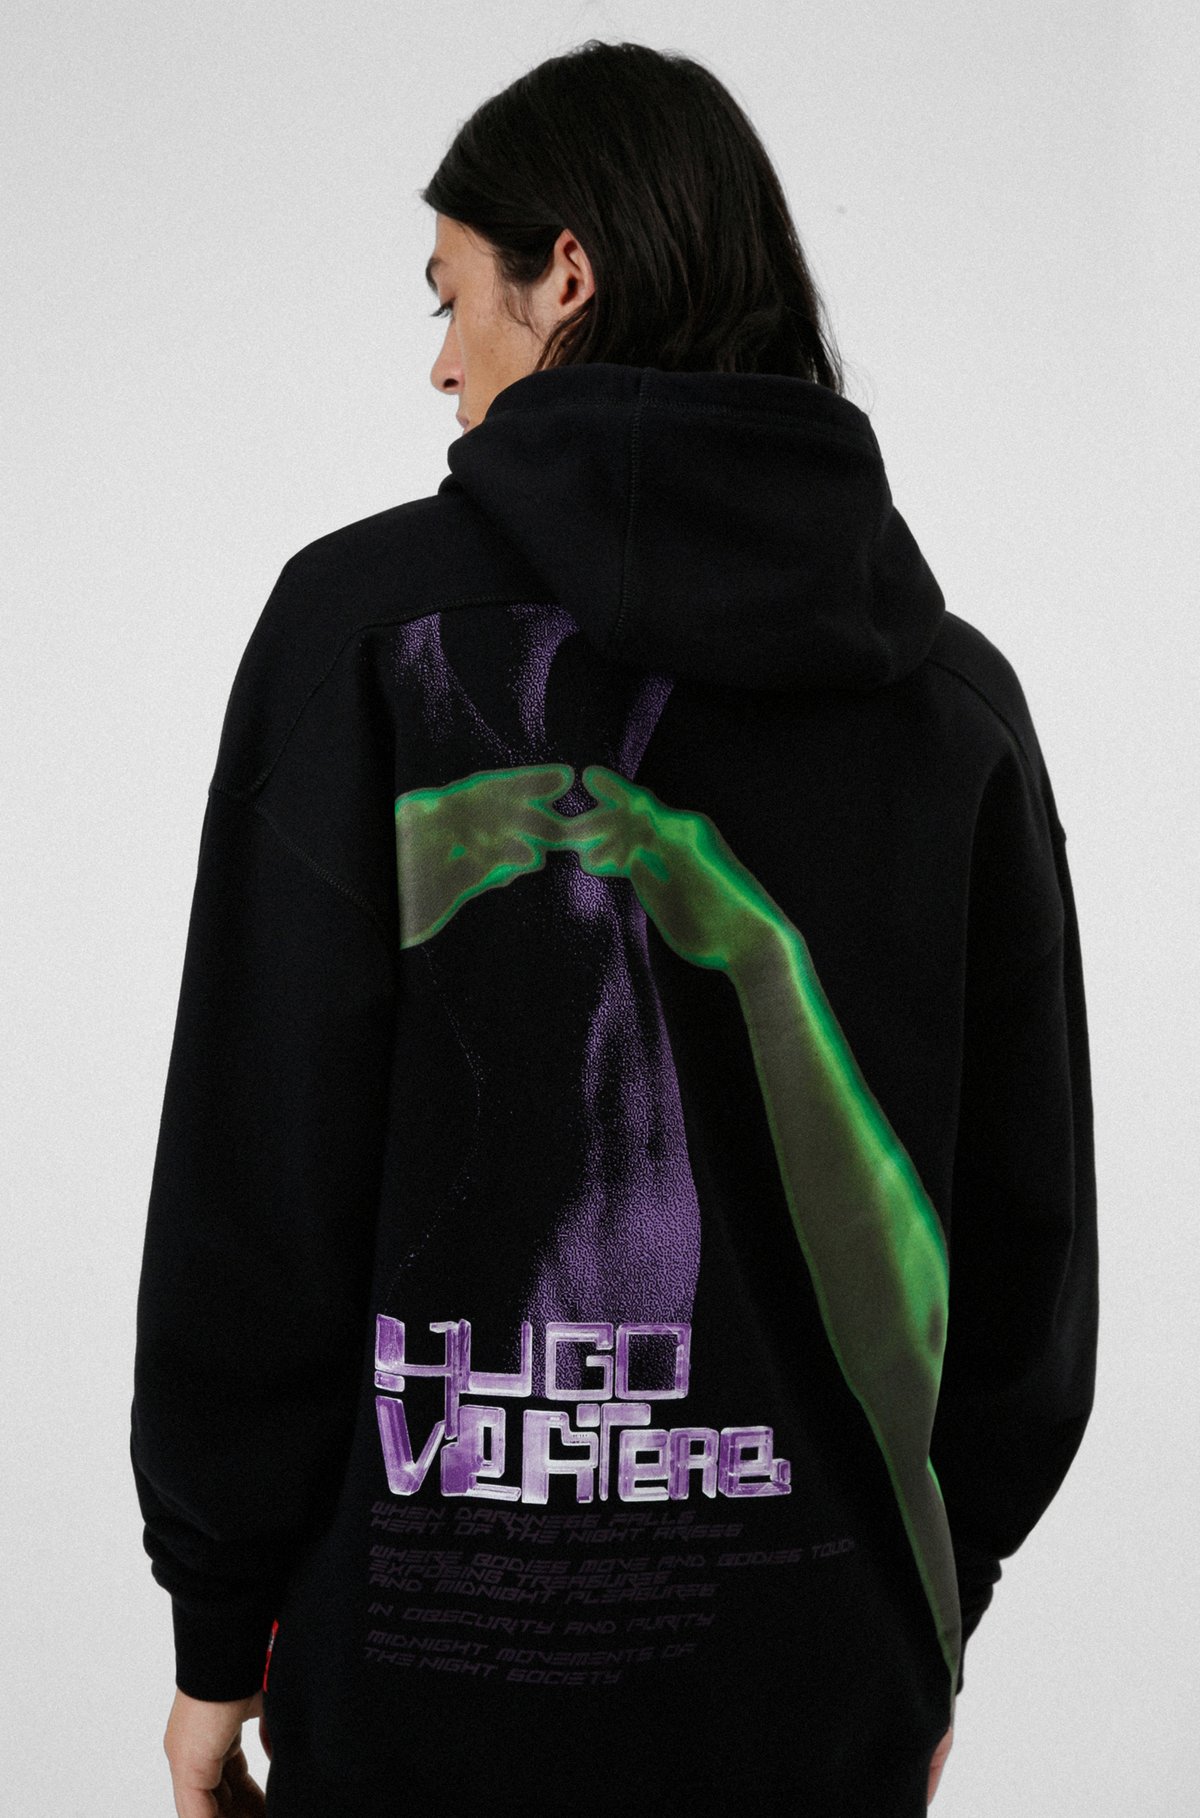 Hooded sweatshirt with collaborative branded artwork, Black